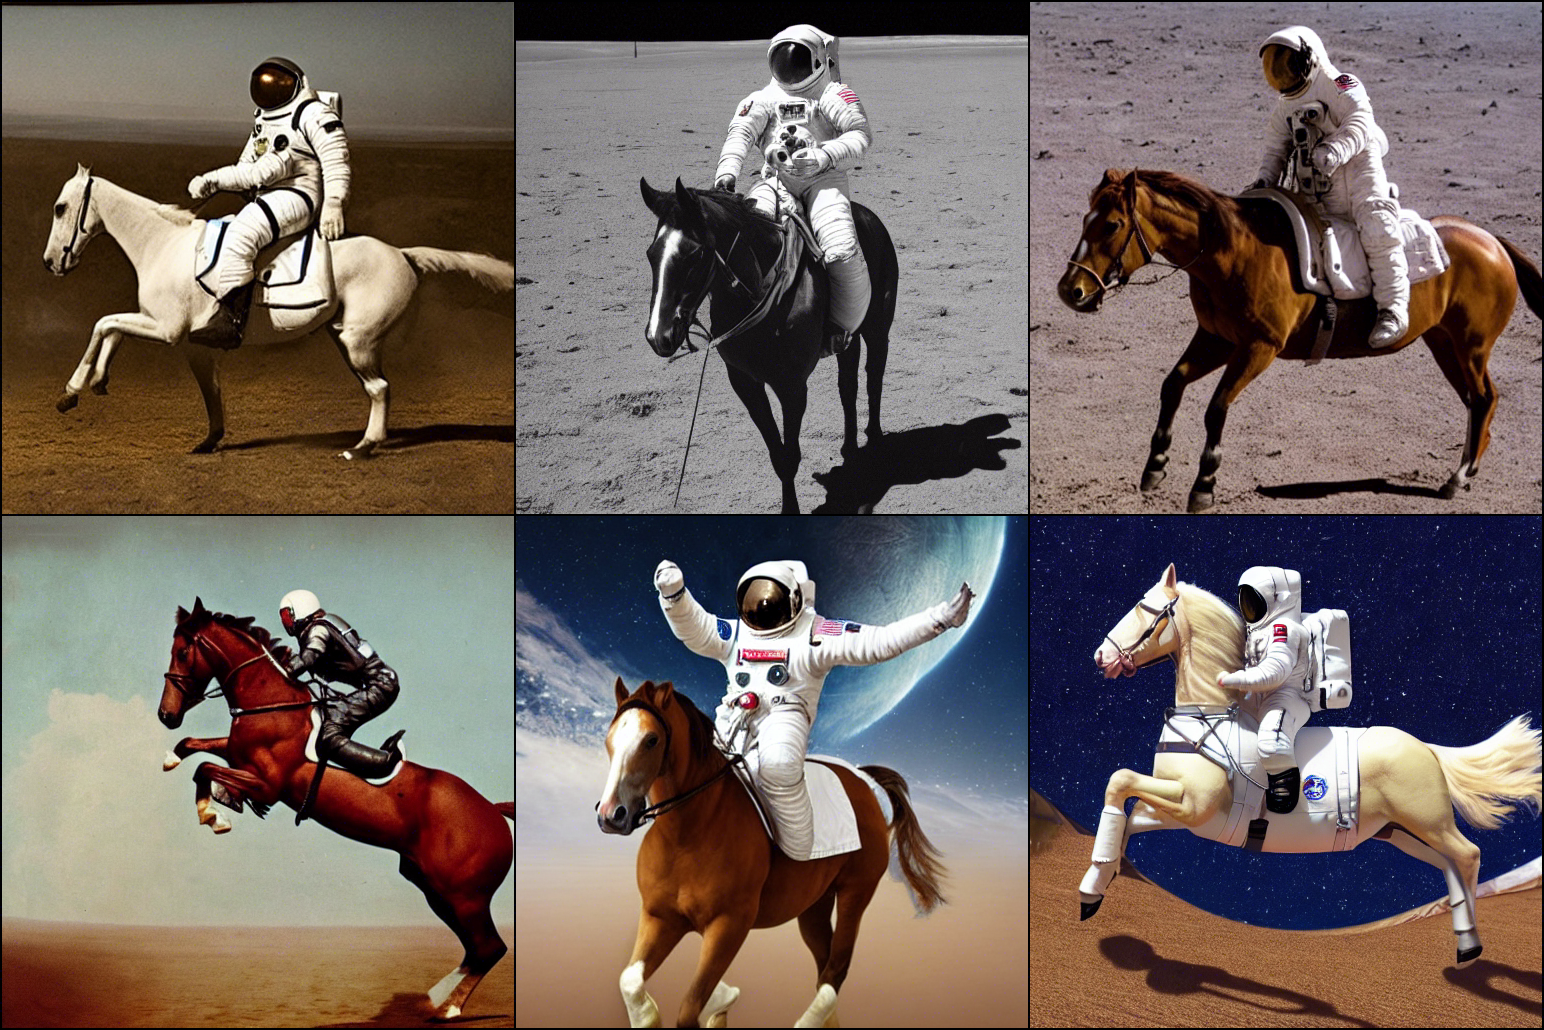 https://raw.githubusercontent.com/cirosantilli/media/master/Runwayml_stable-diffusion_a-photograph-of-an-astronaut-riding-a-horse.png